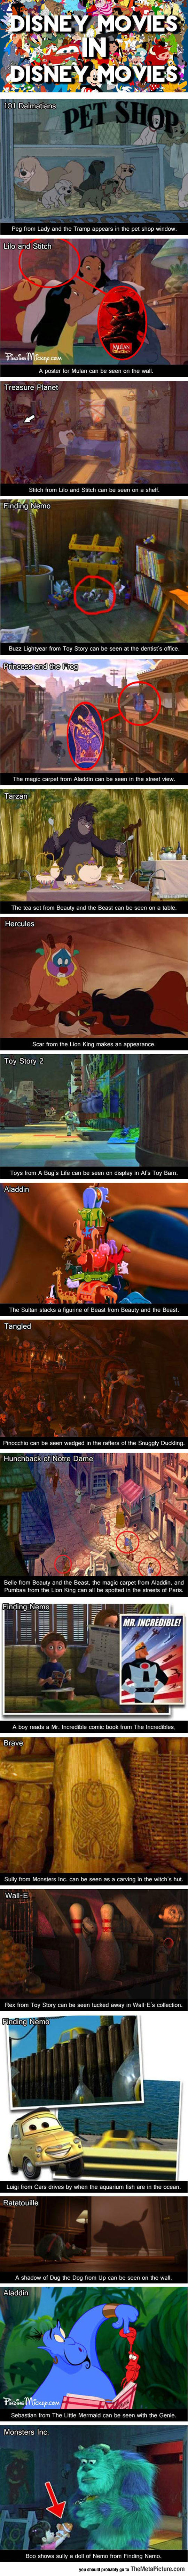 Disney Films Inside Other Disney Films